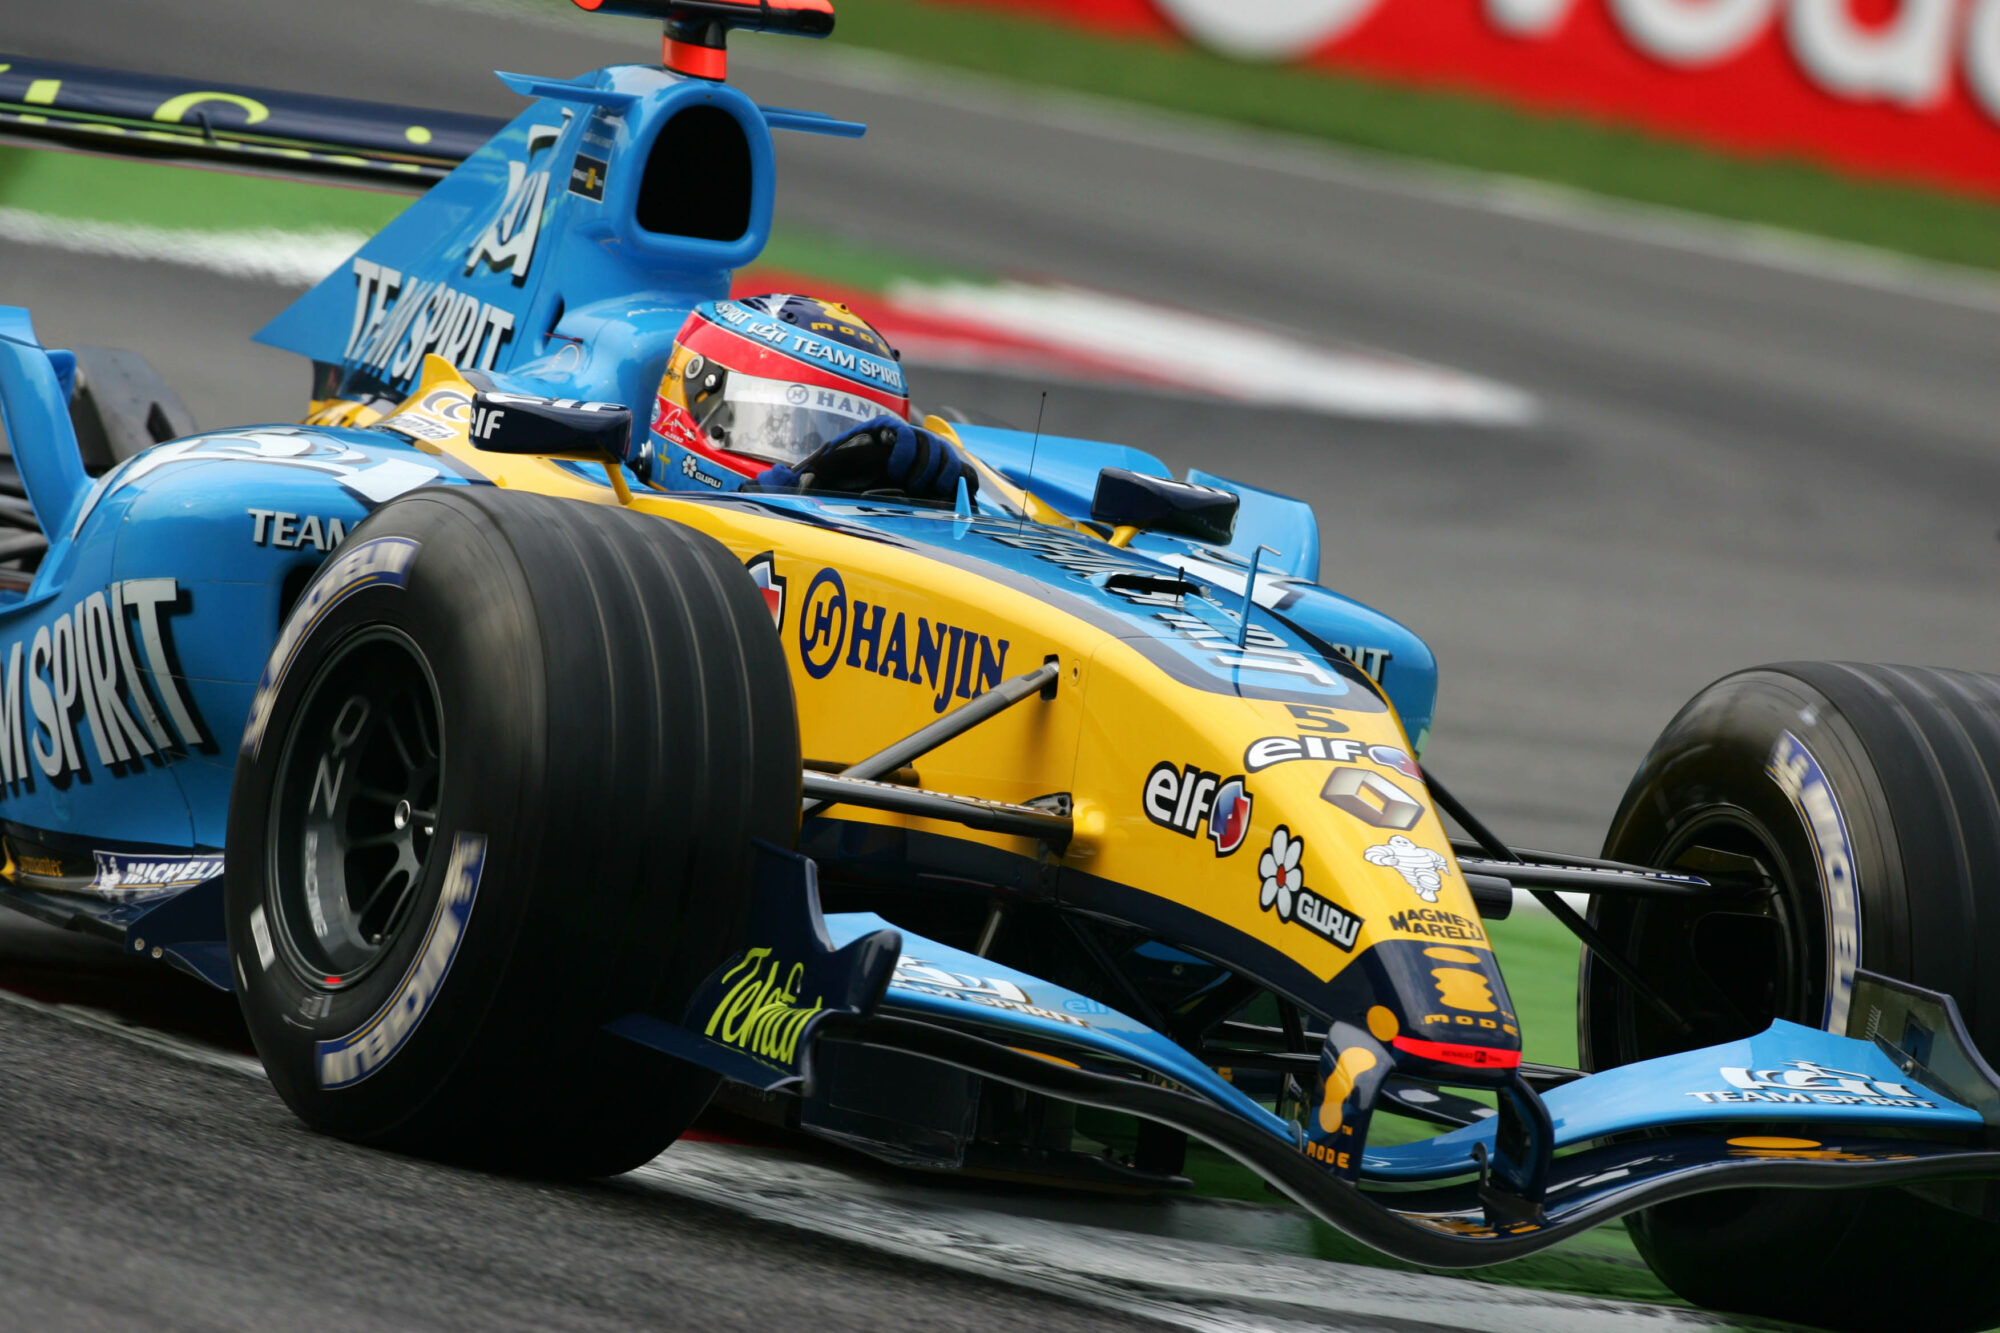 2020 - Fernando Alonso rejoint lcurie Renault DP World F1 Team (1).jpg